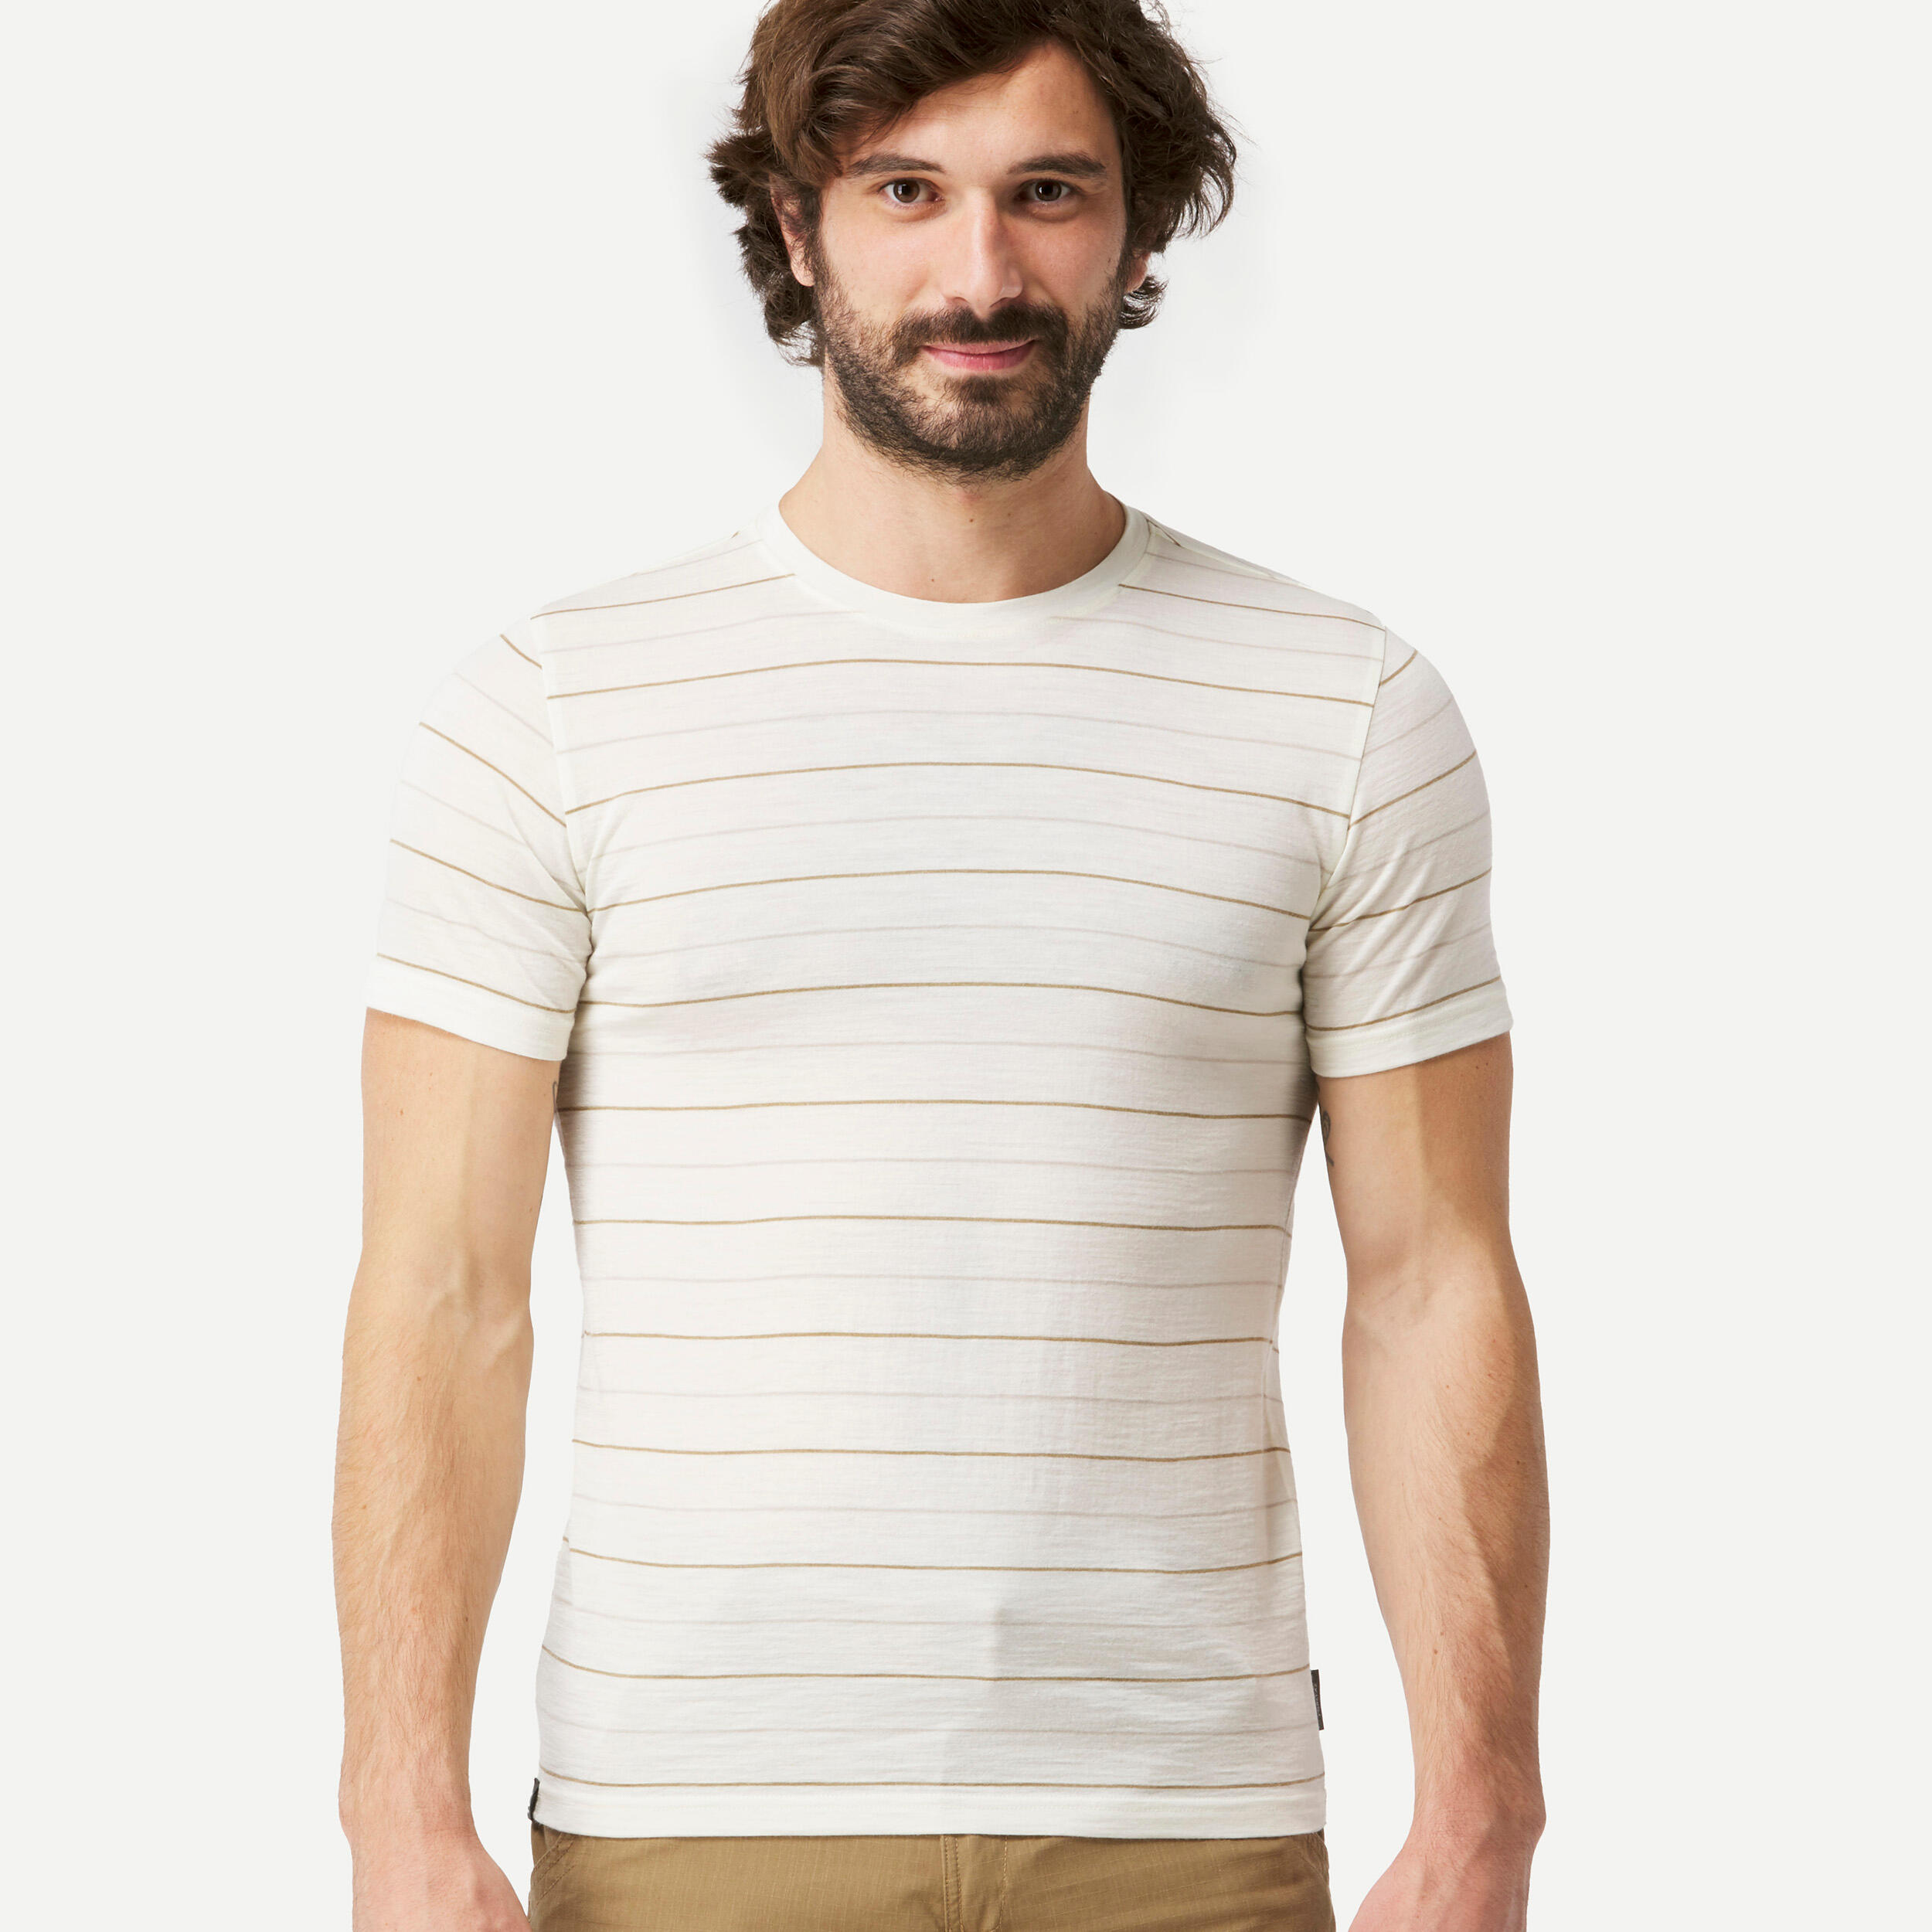 Men’s short-sleeved Merino wool hiking travel t-shirt - TRAVEL 500 ...